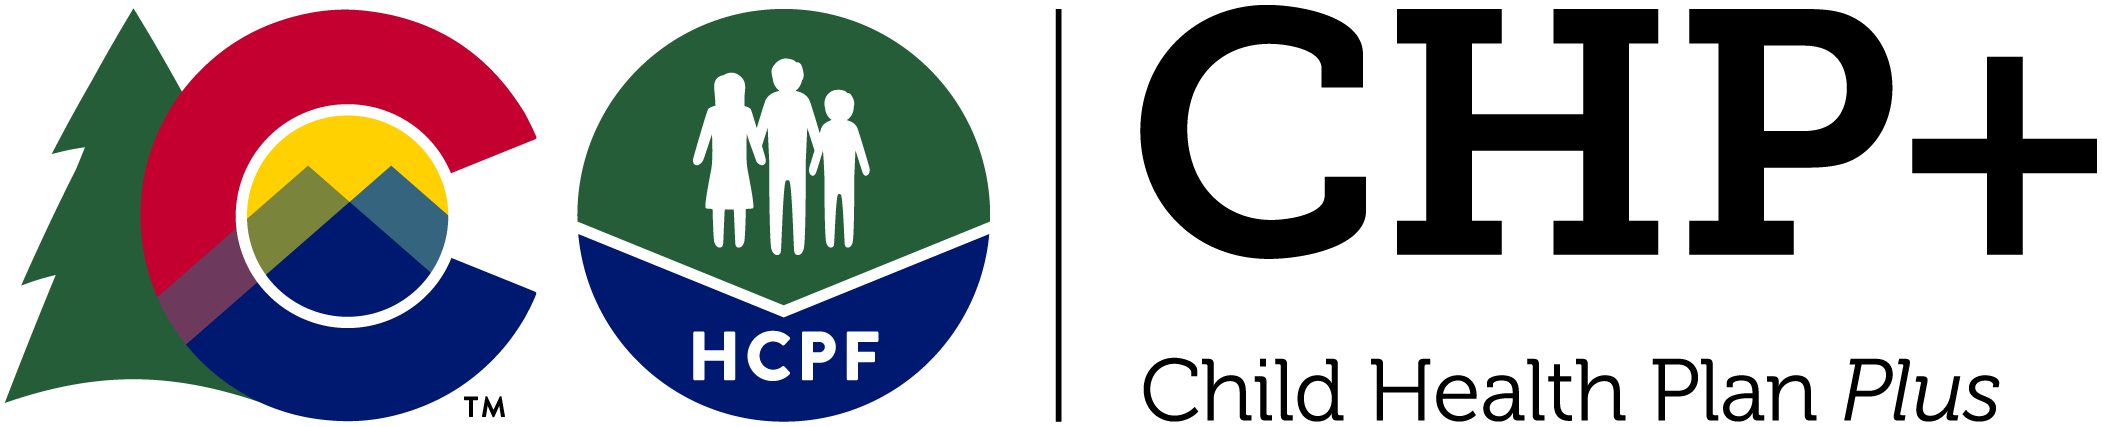 Colorado Child Health Plan Plus logo